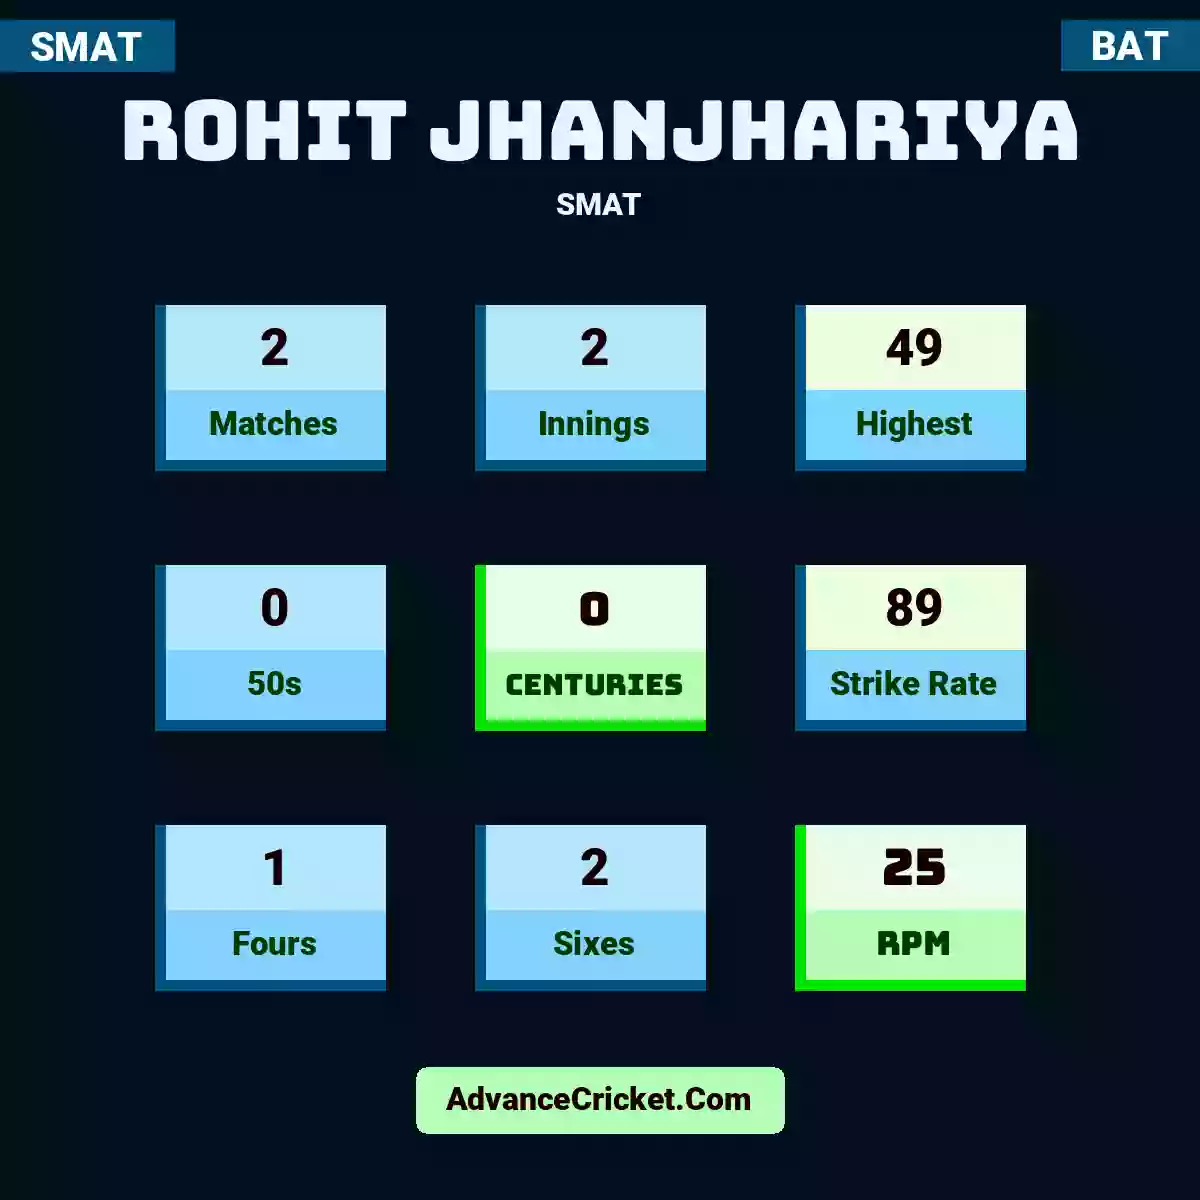 Rohit Jhanjhariya SMAT , Rohit Jhanjhariya played 2 matches, scored 49 runs as highest, 0 half-centuries, and 0 centuries, with a strike rate of 89. R.Jhanjhariya hit 1 fours and 2 sixes, with an RPM of 25.